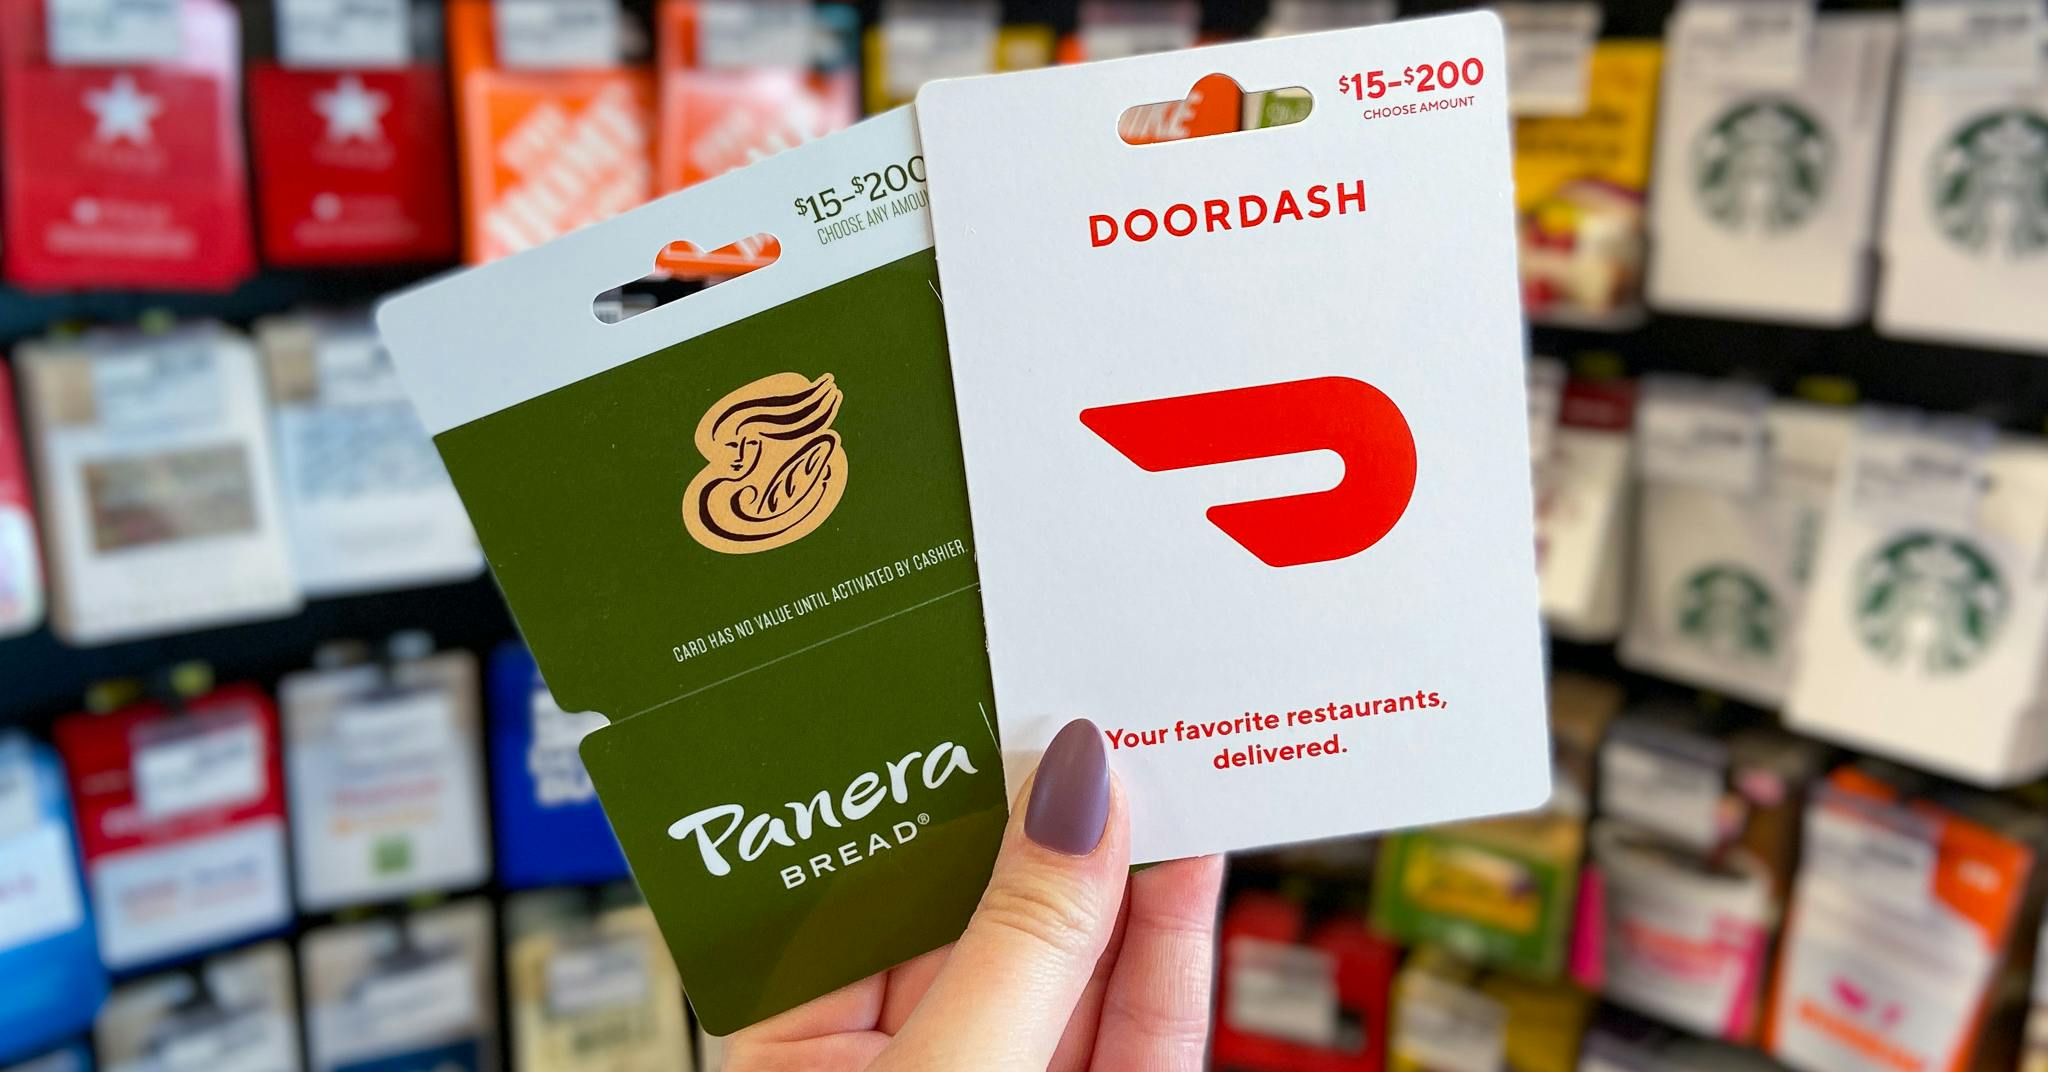 Panera Bread, DoorDash, & More 10 Off Gift Cards at CVS